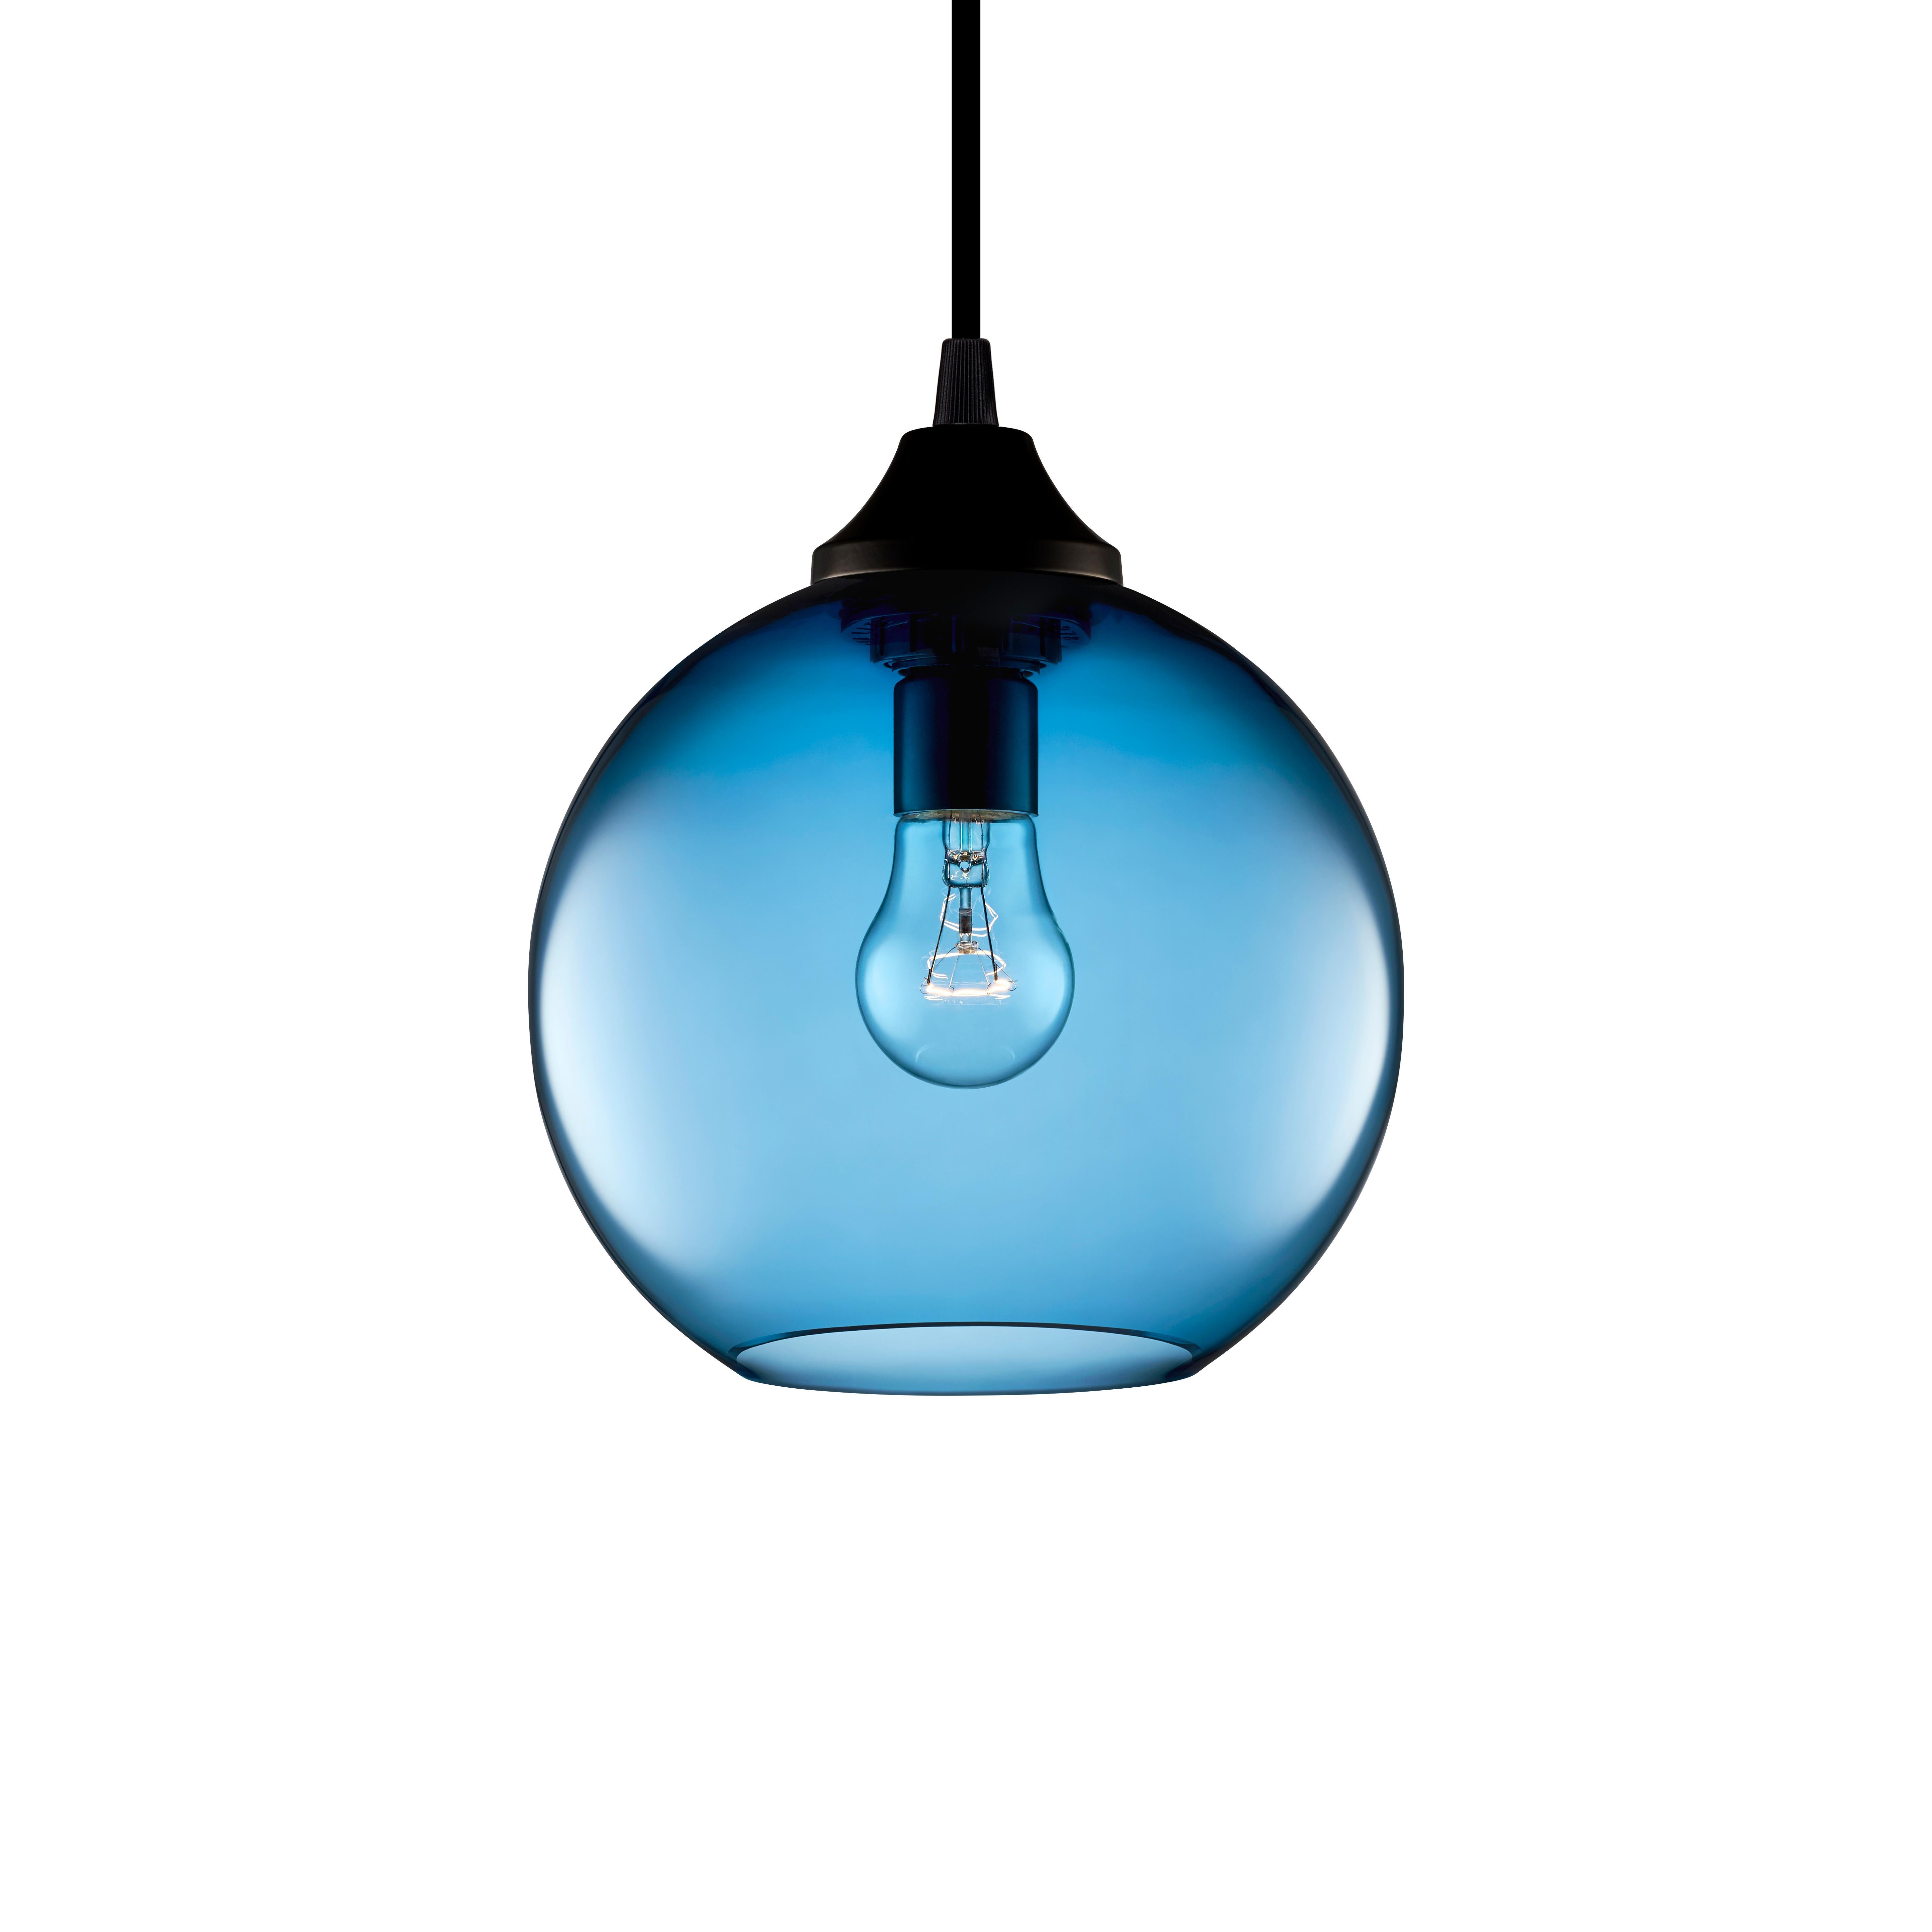 Solitaire Petite Sapphire Handblown Modern Glass Pendant Light, Made in the USA